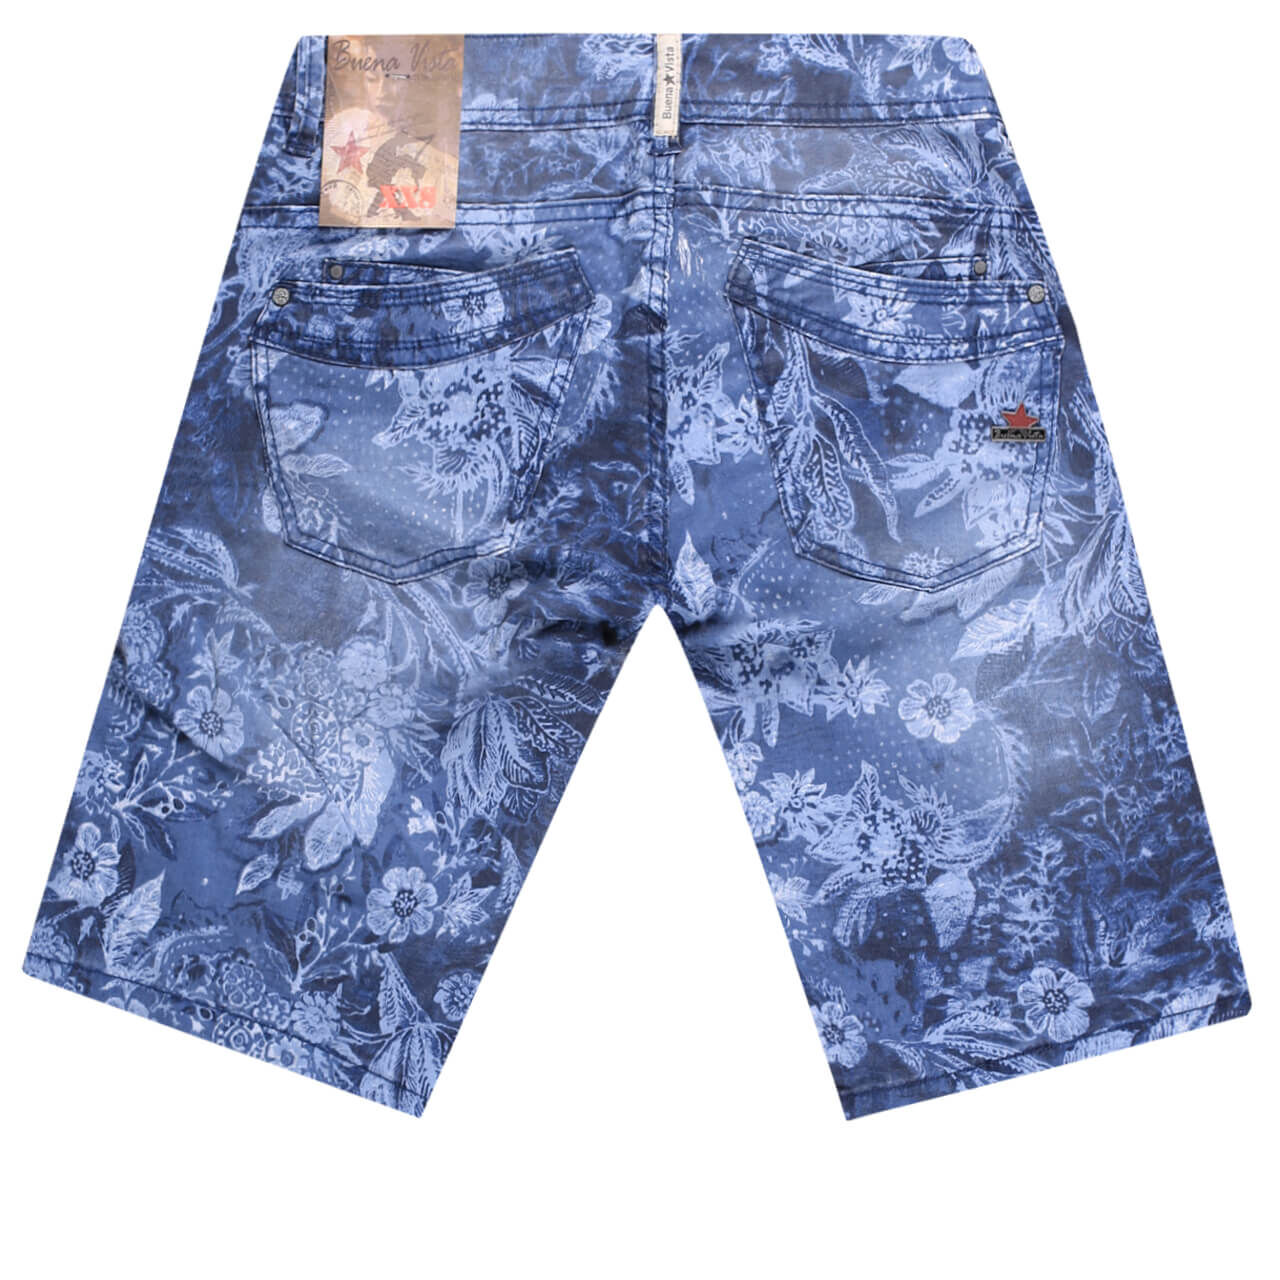 Buena Vista Malibu-Short Stretch Twill Baumwollhose für Damen in Blau mit Print, FarbNr.: 7445